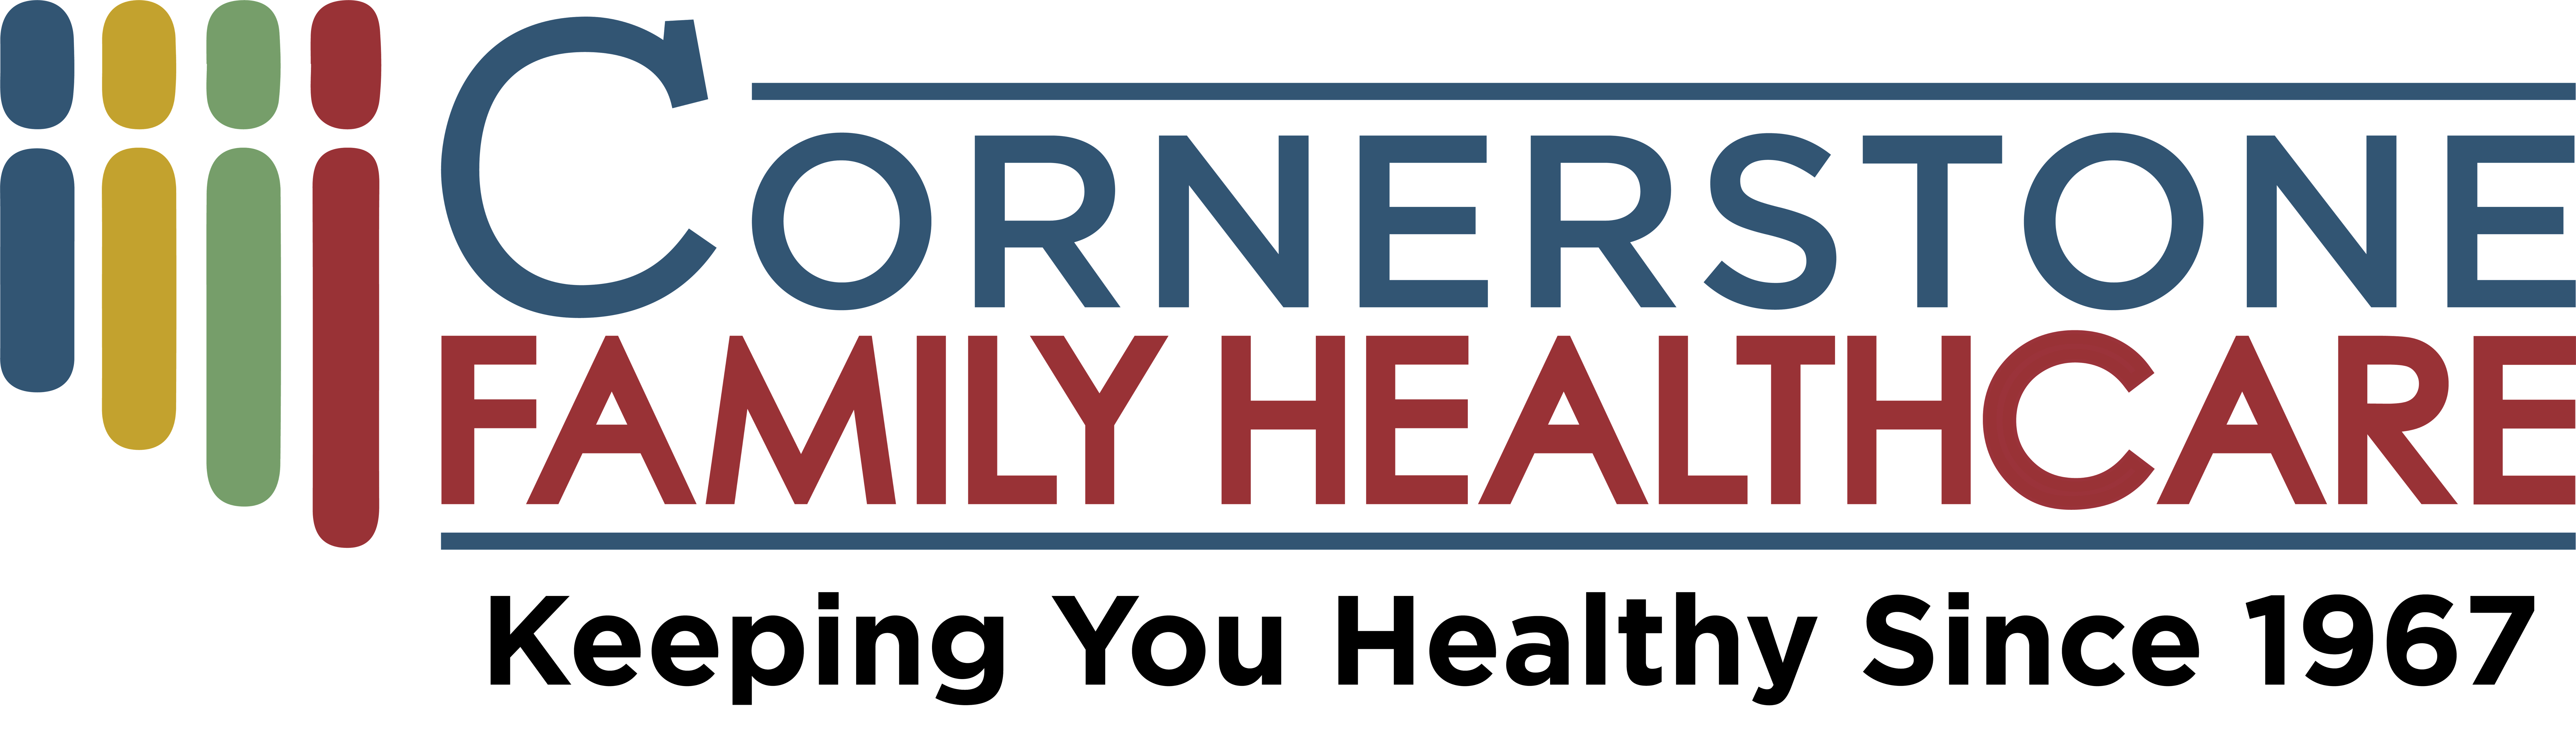 cornerstone family healthcare